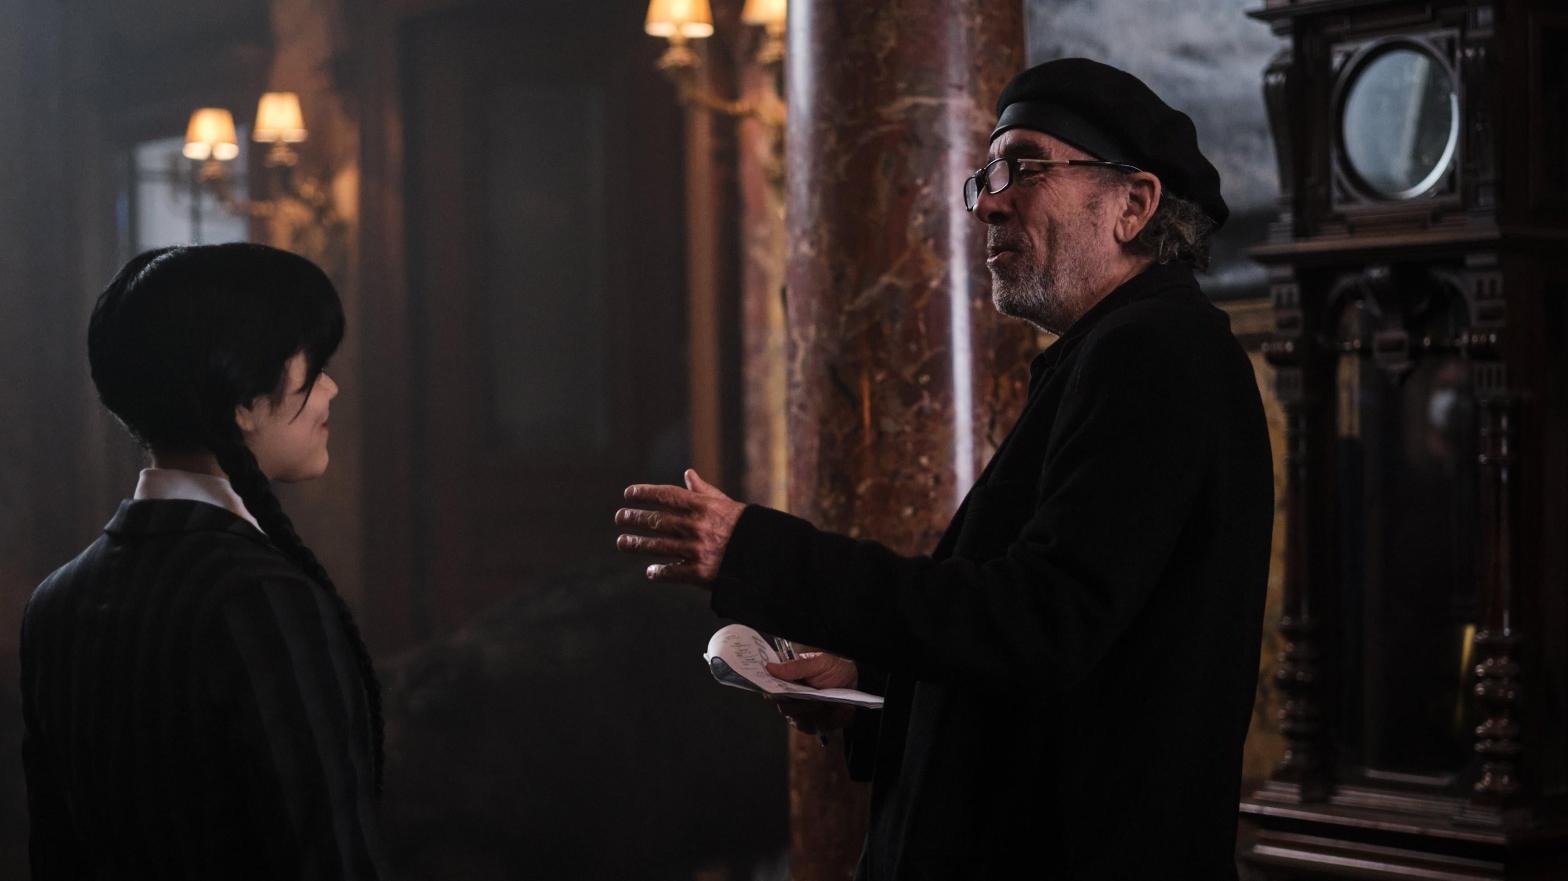 Jenna Ortega as Wednesday Addams and Director Tim Burton on set (Image: Tomasz Lazar | Netflix)